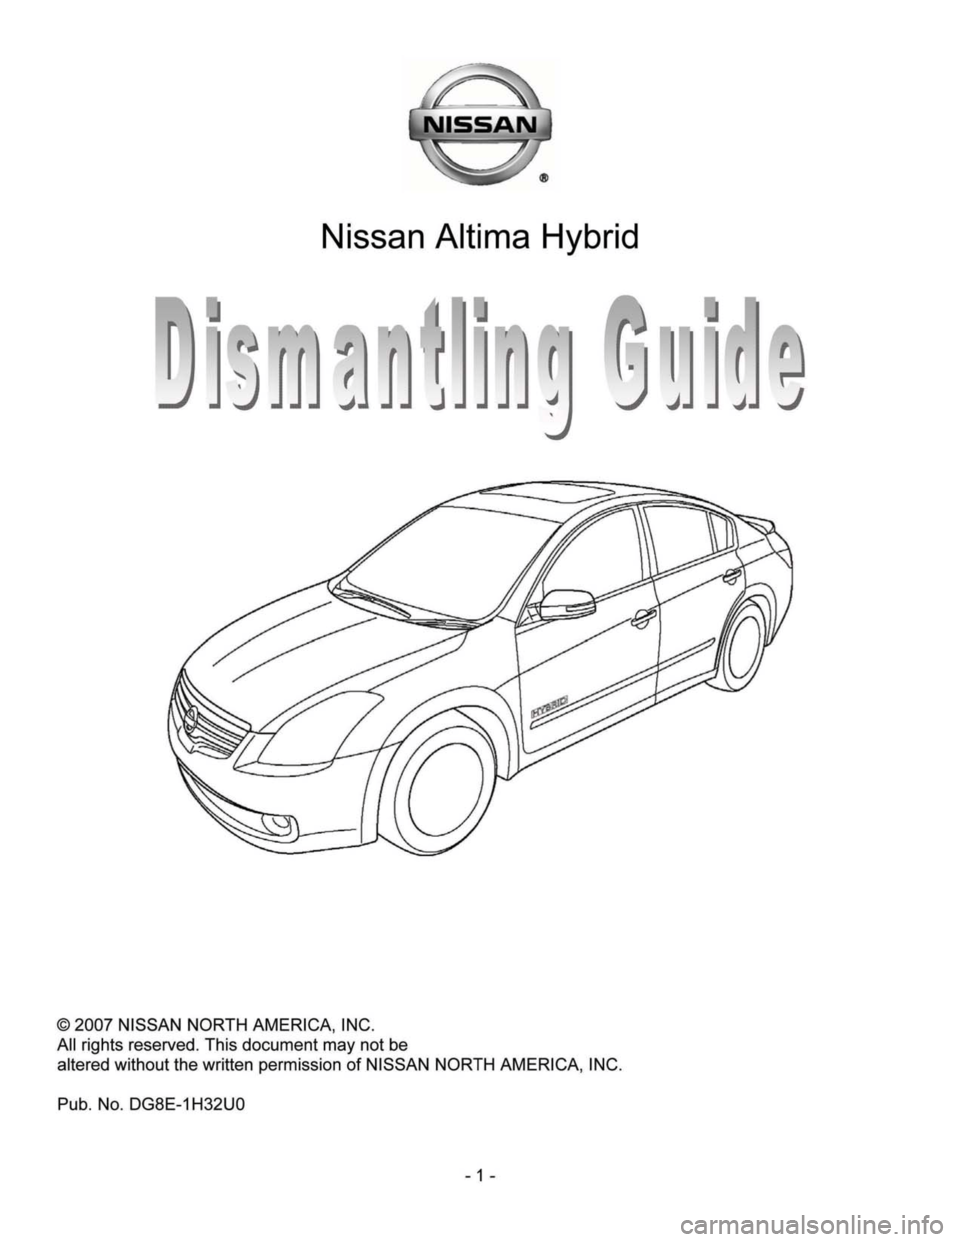 NISSAN ALTIMA HYBRID 2008 L32A / 4.G Dismantling Guide 